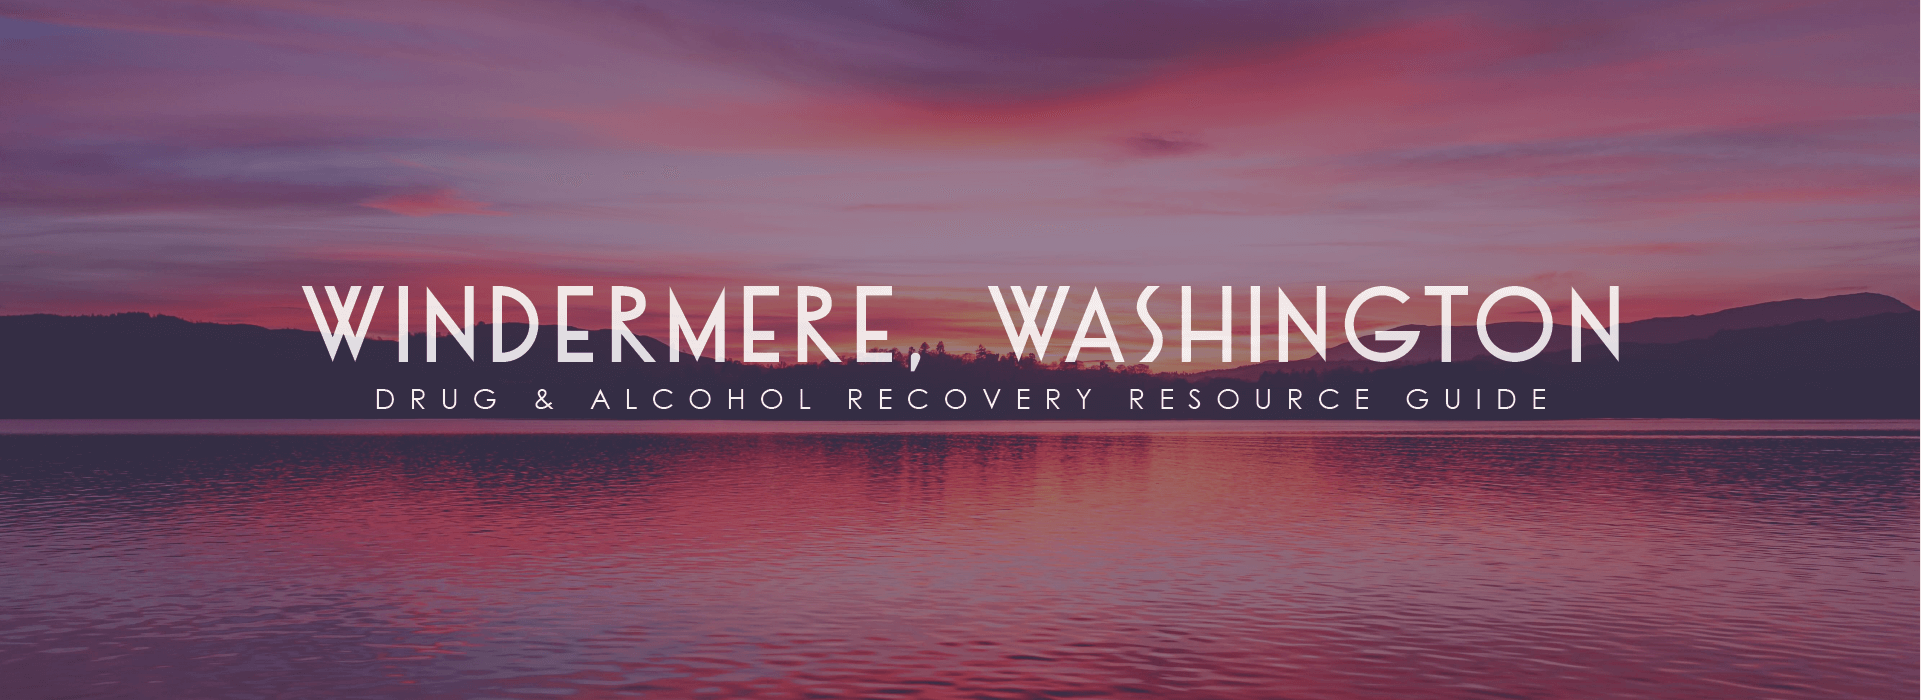 Windermere, Washington Addiction Resources